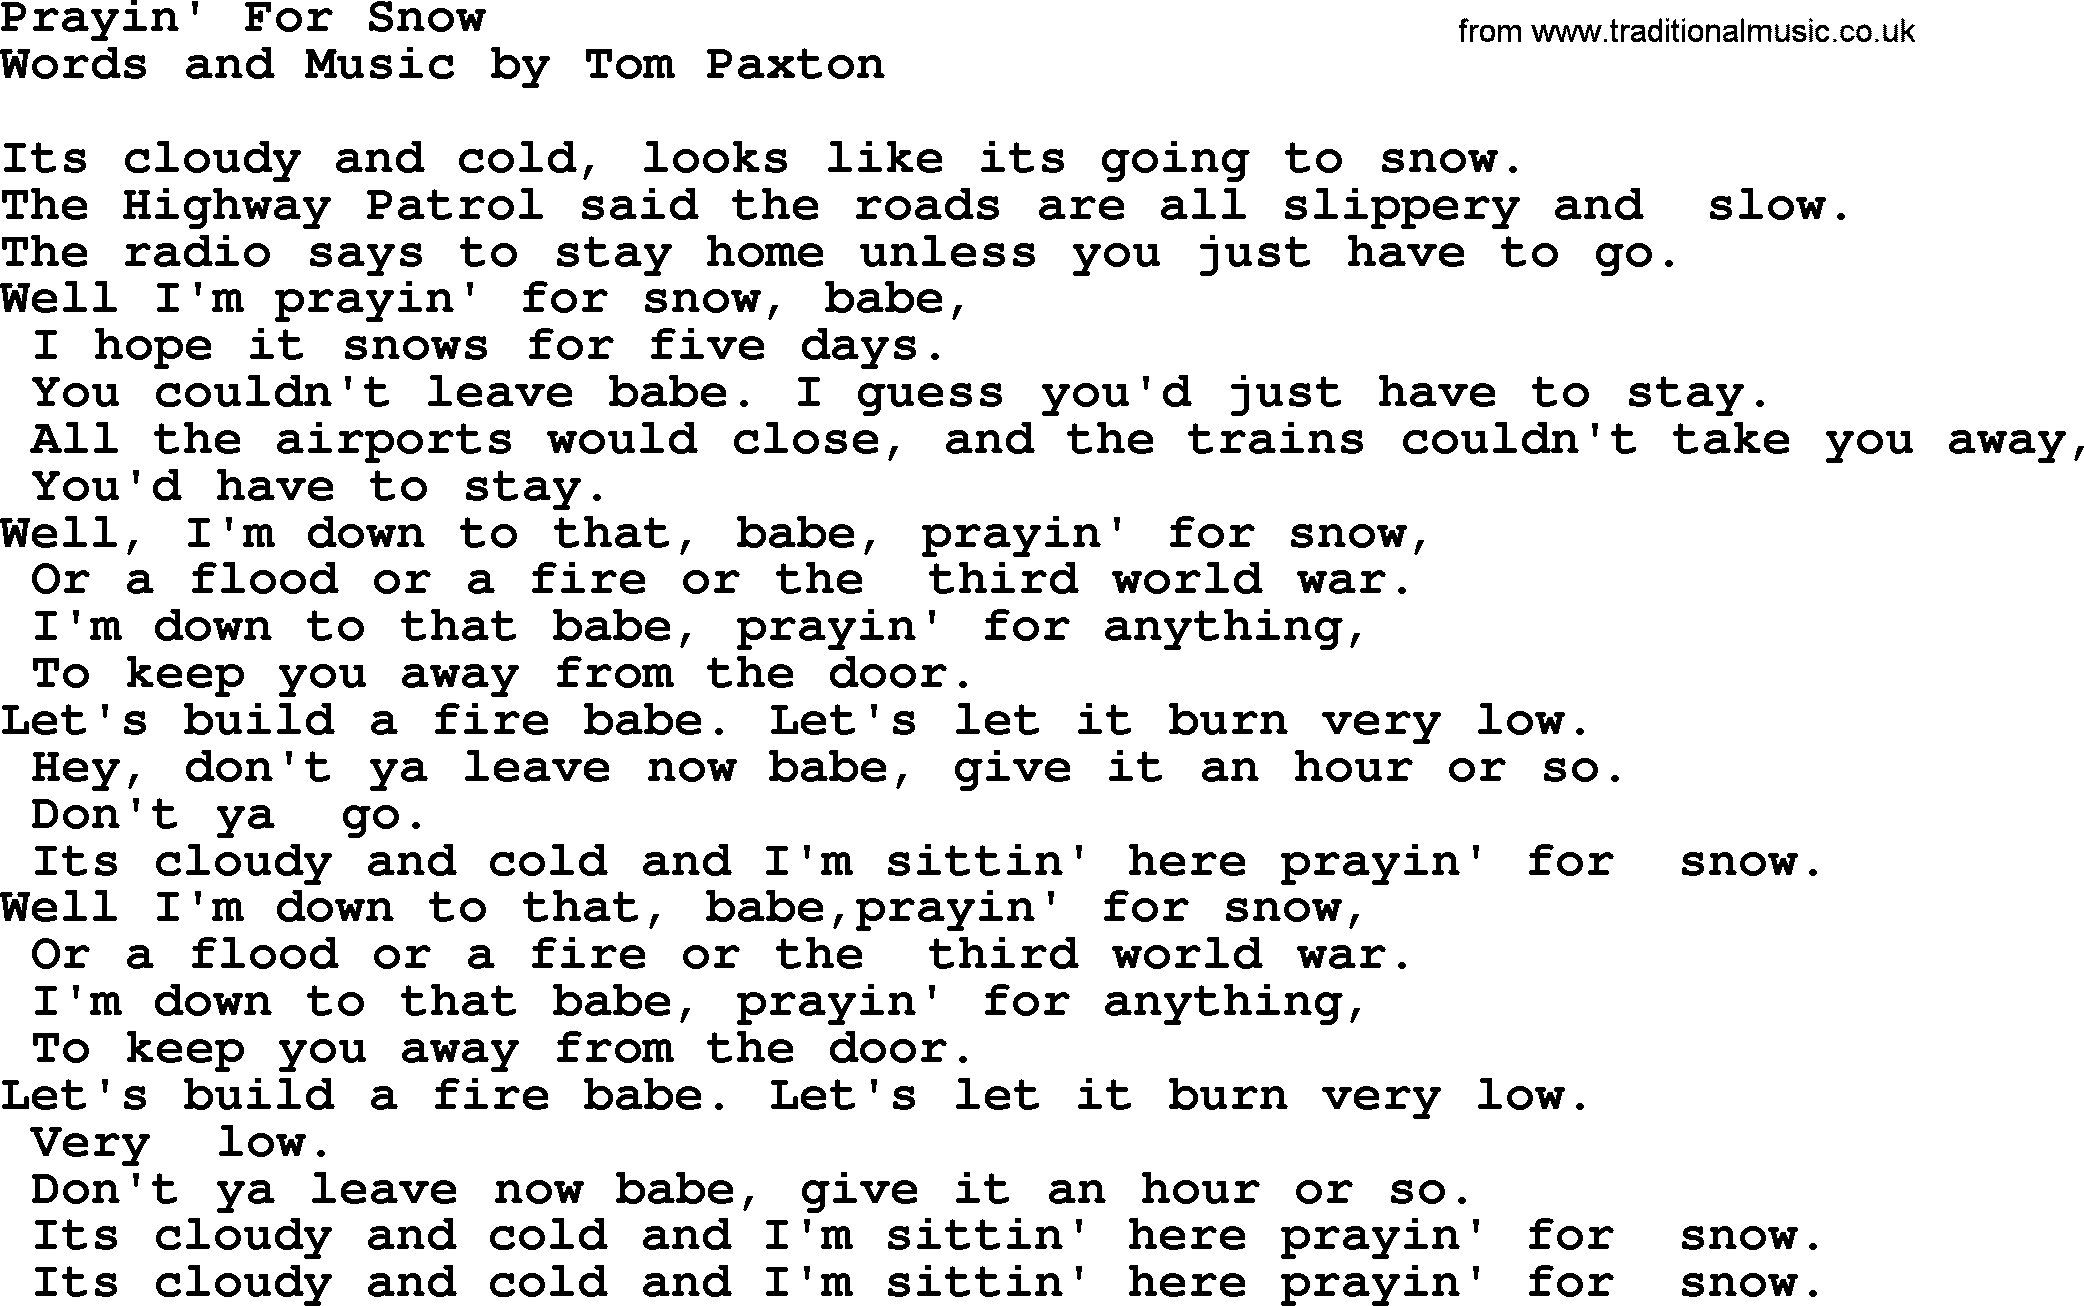 Tom Paxton song: Prayin' For Snow, lyrics